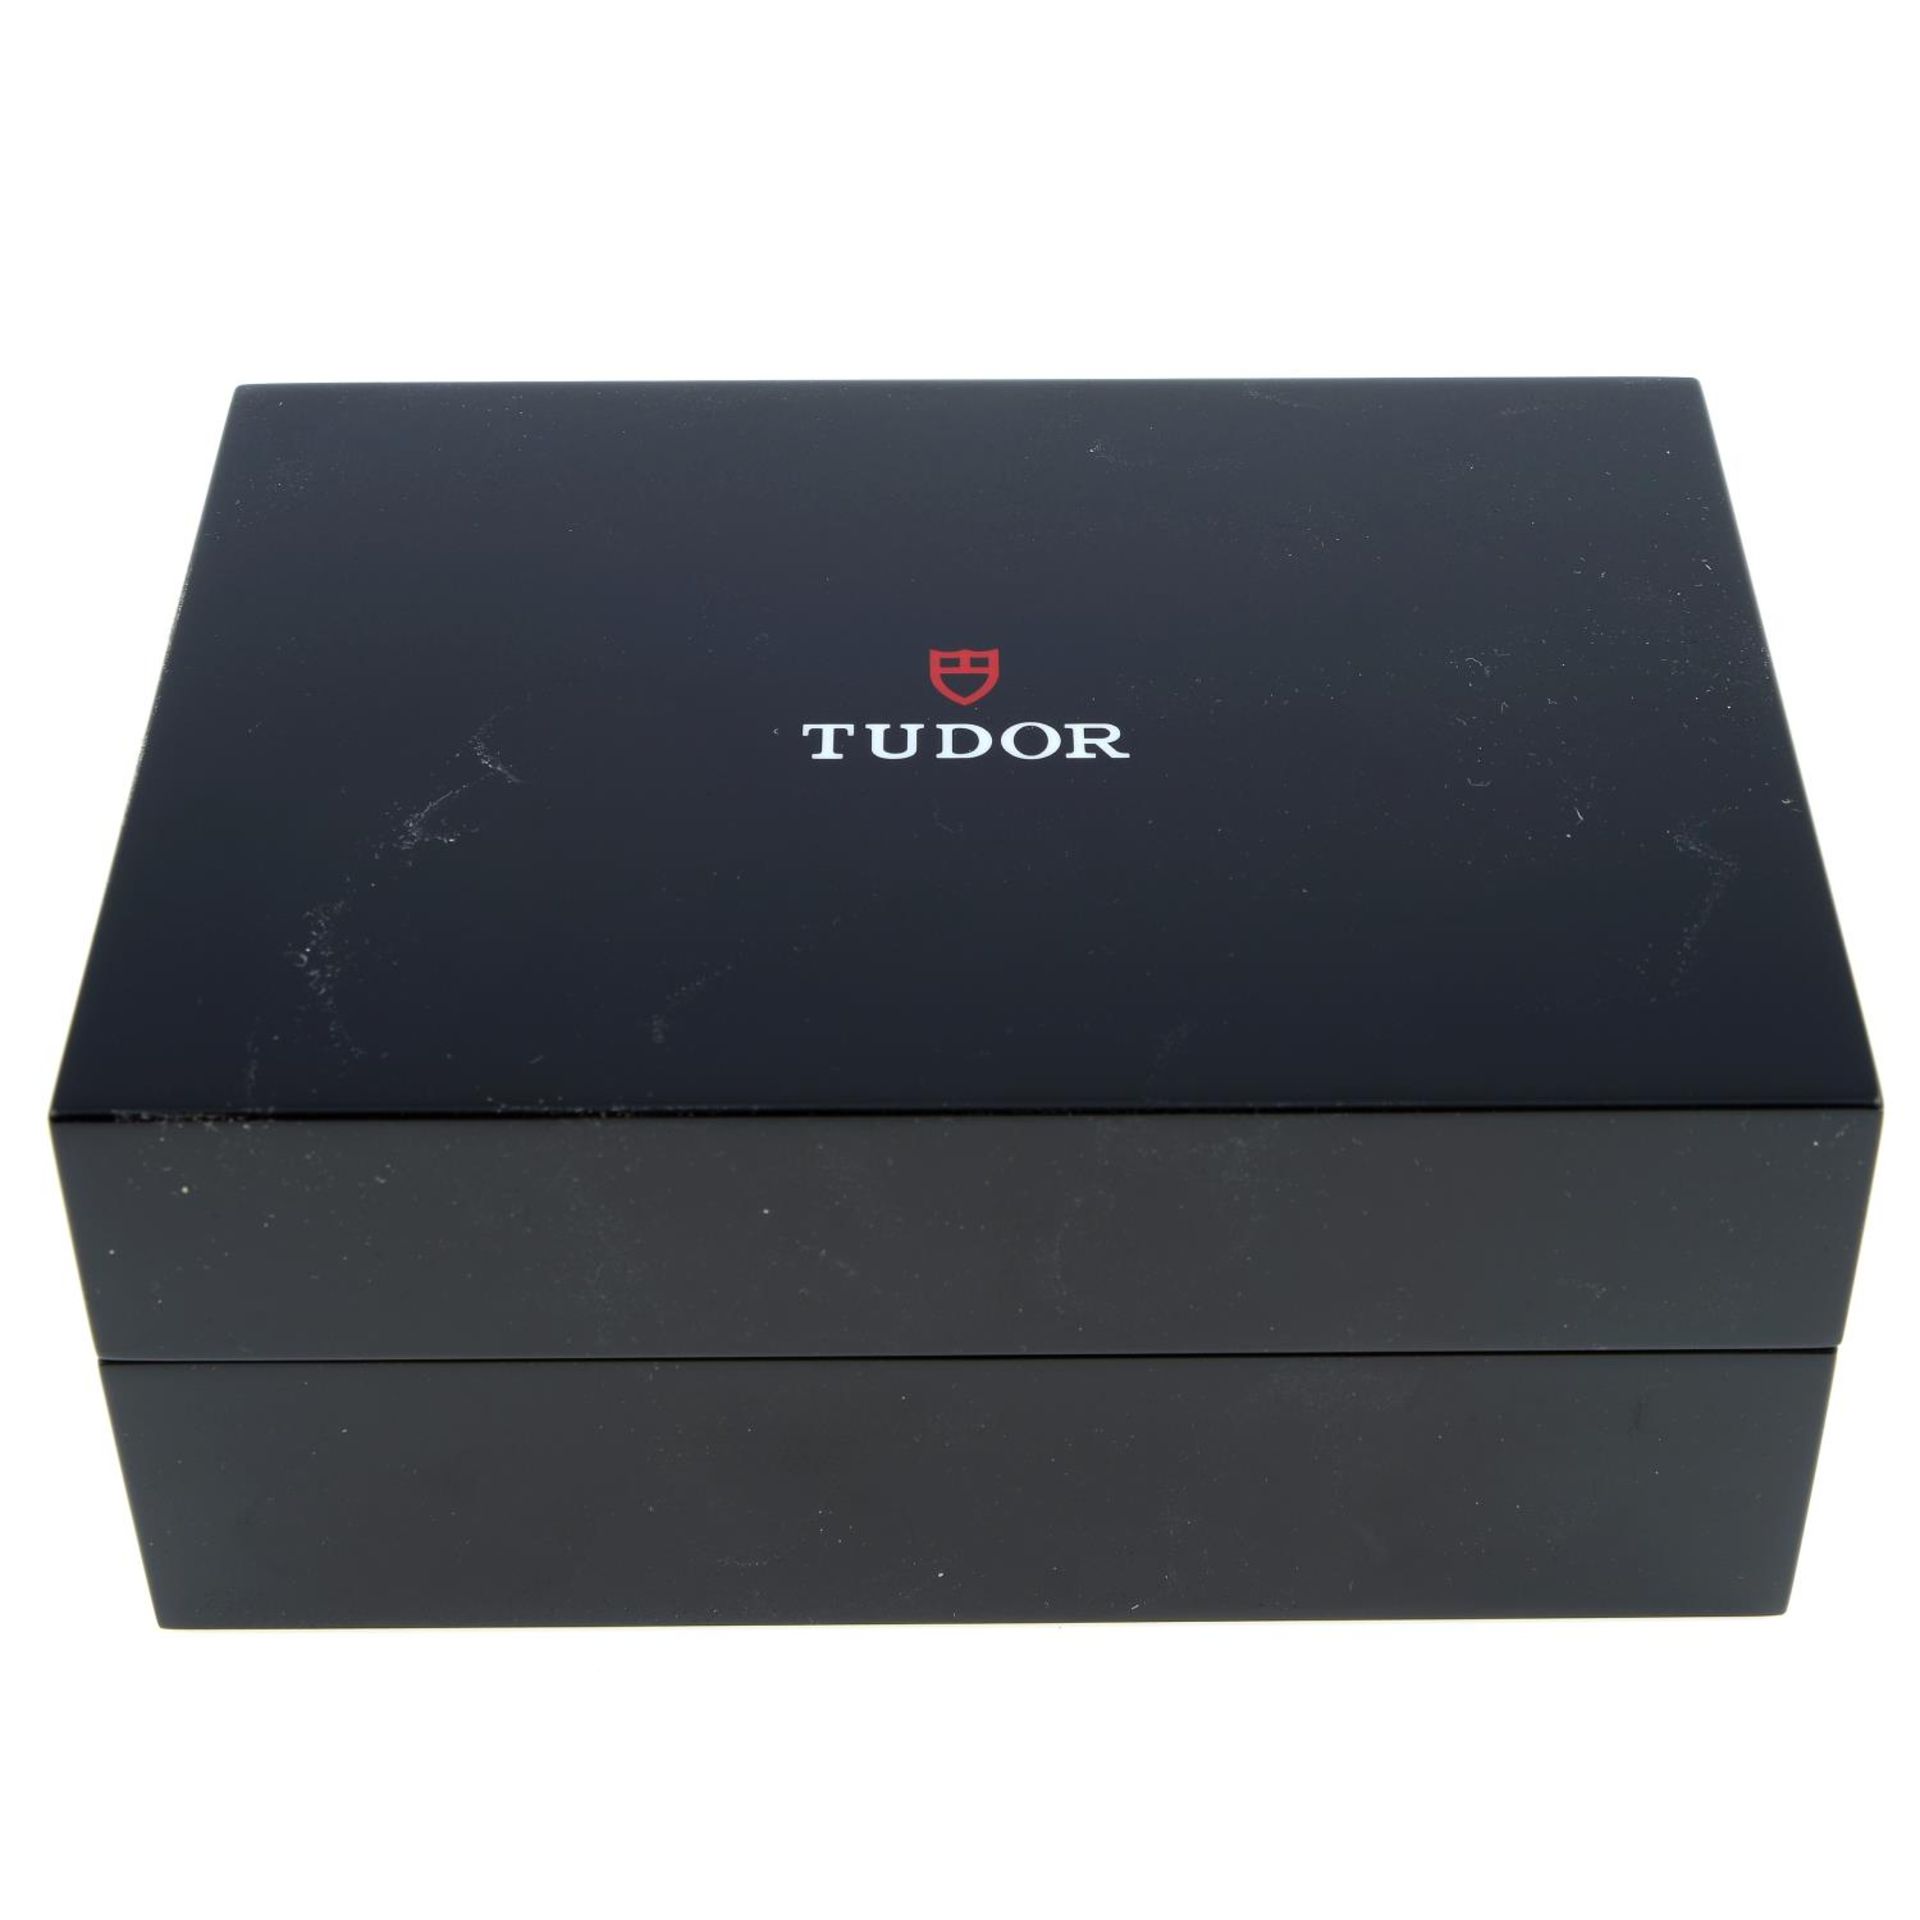 TUDOR - a watch box.